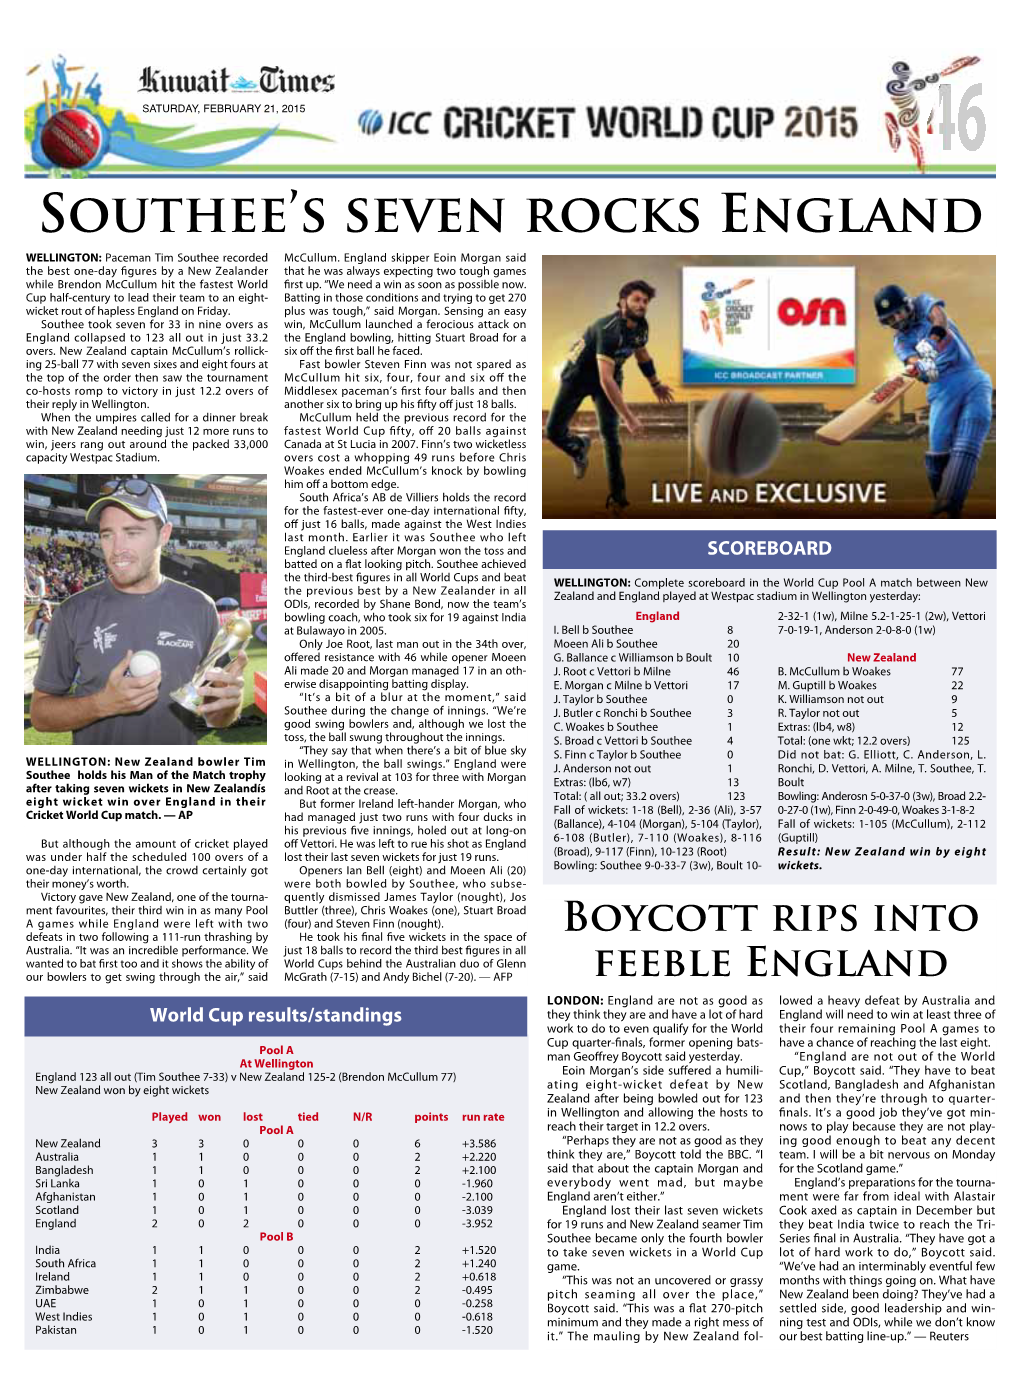 Southee's Seven Rocks England